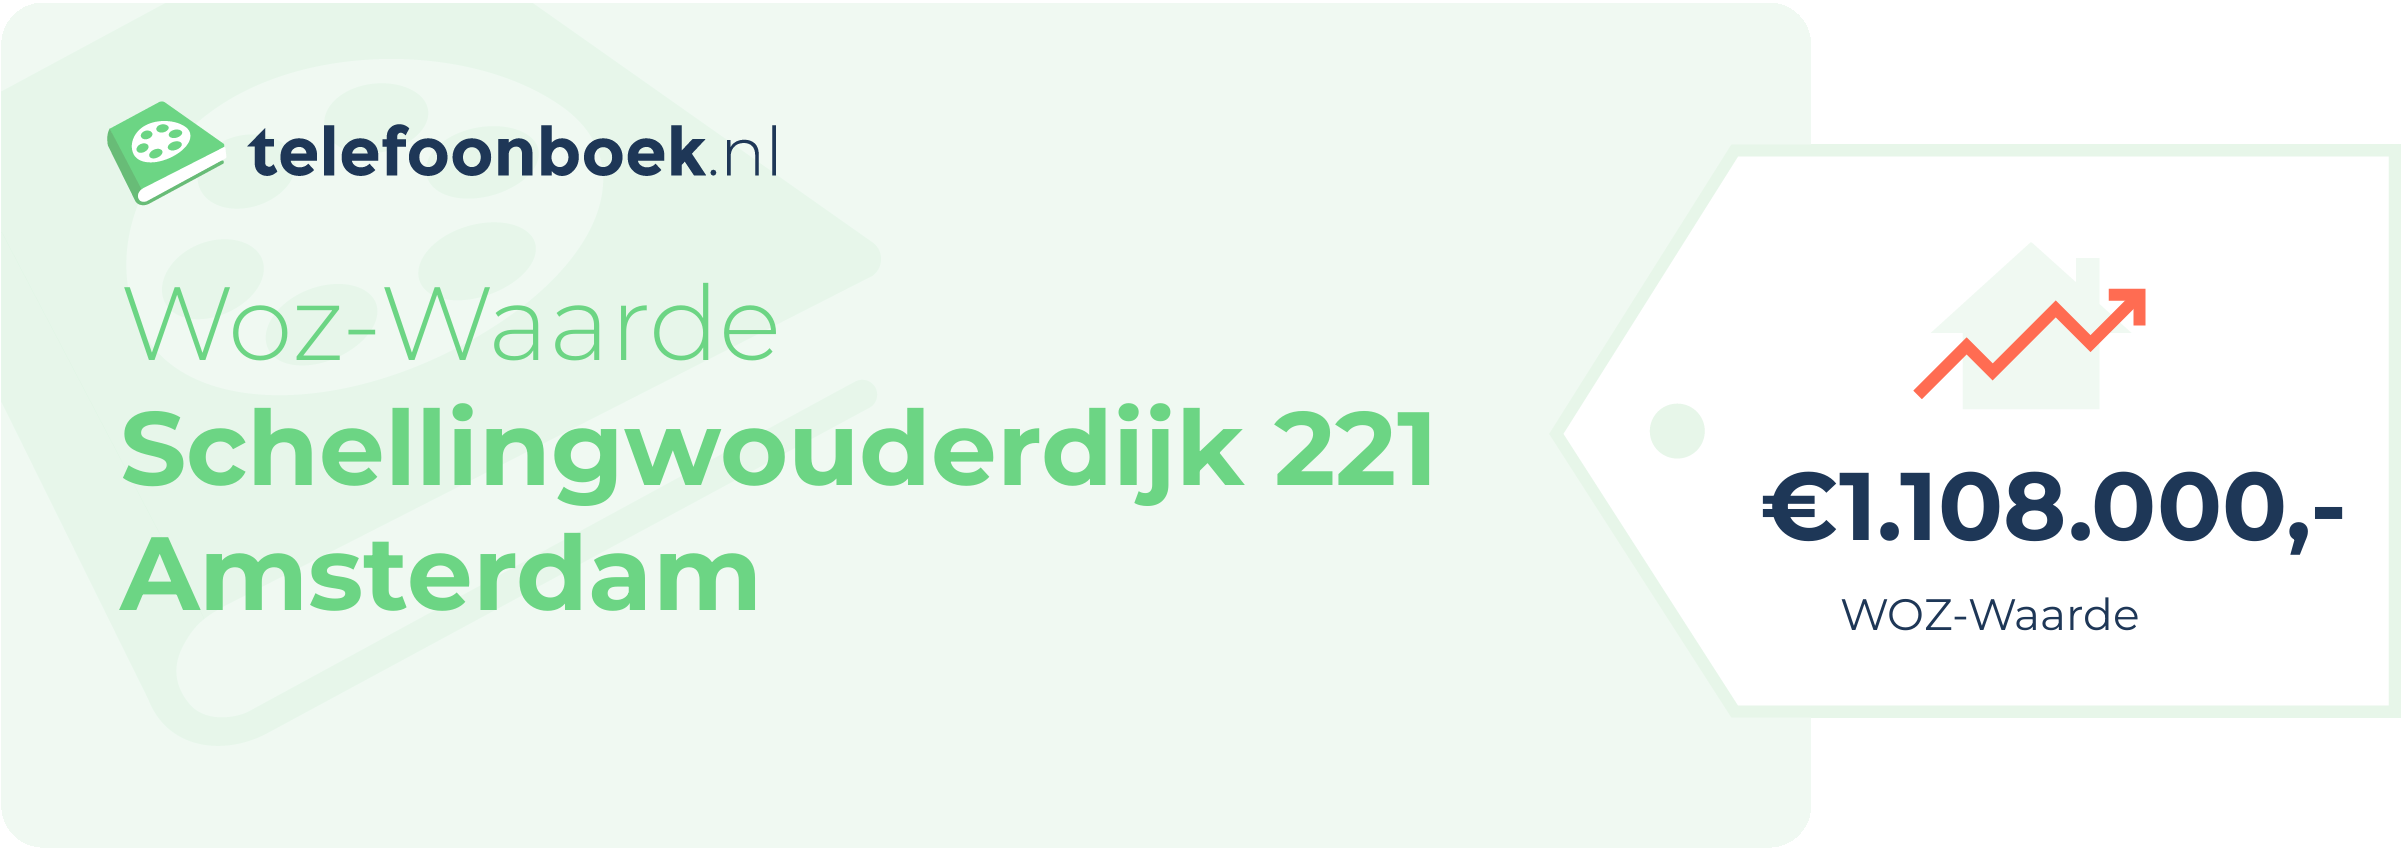 WOZ-waarde Schellingwouderdijk 221 Amsterdam